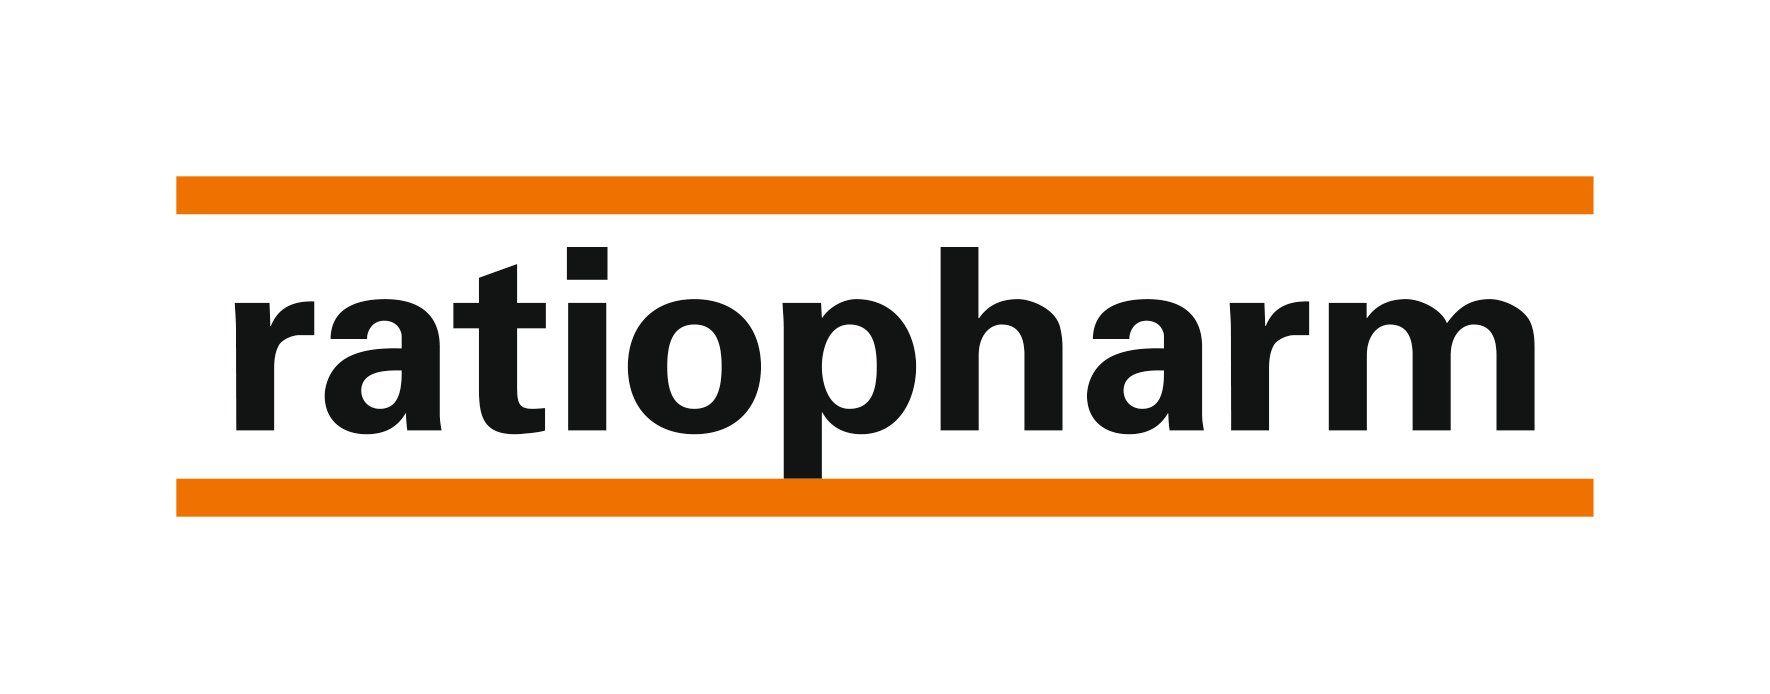 ratiopharm GmbH